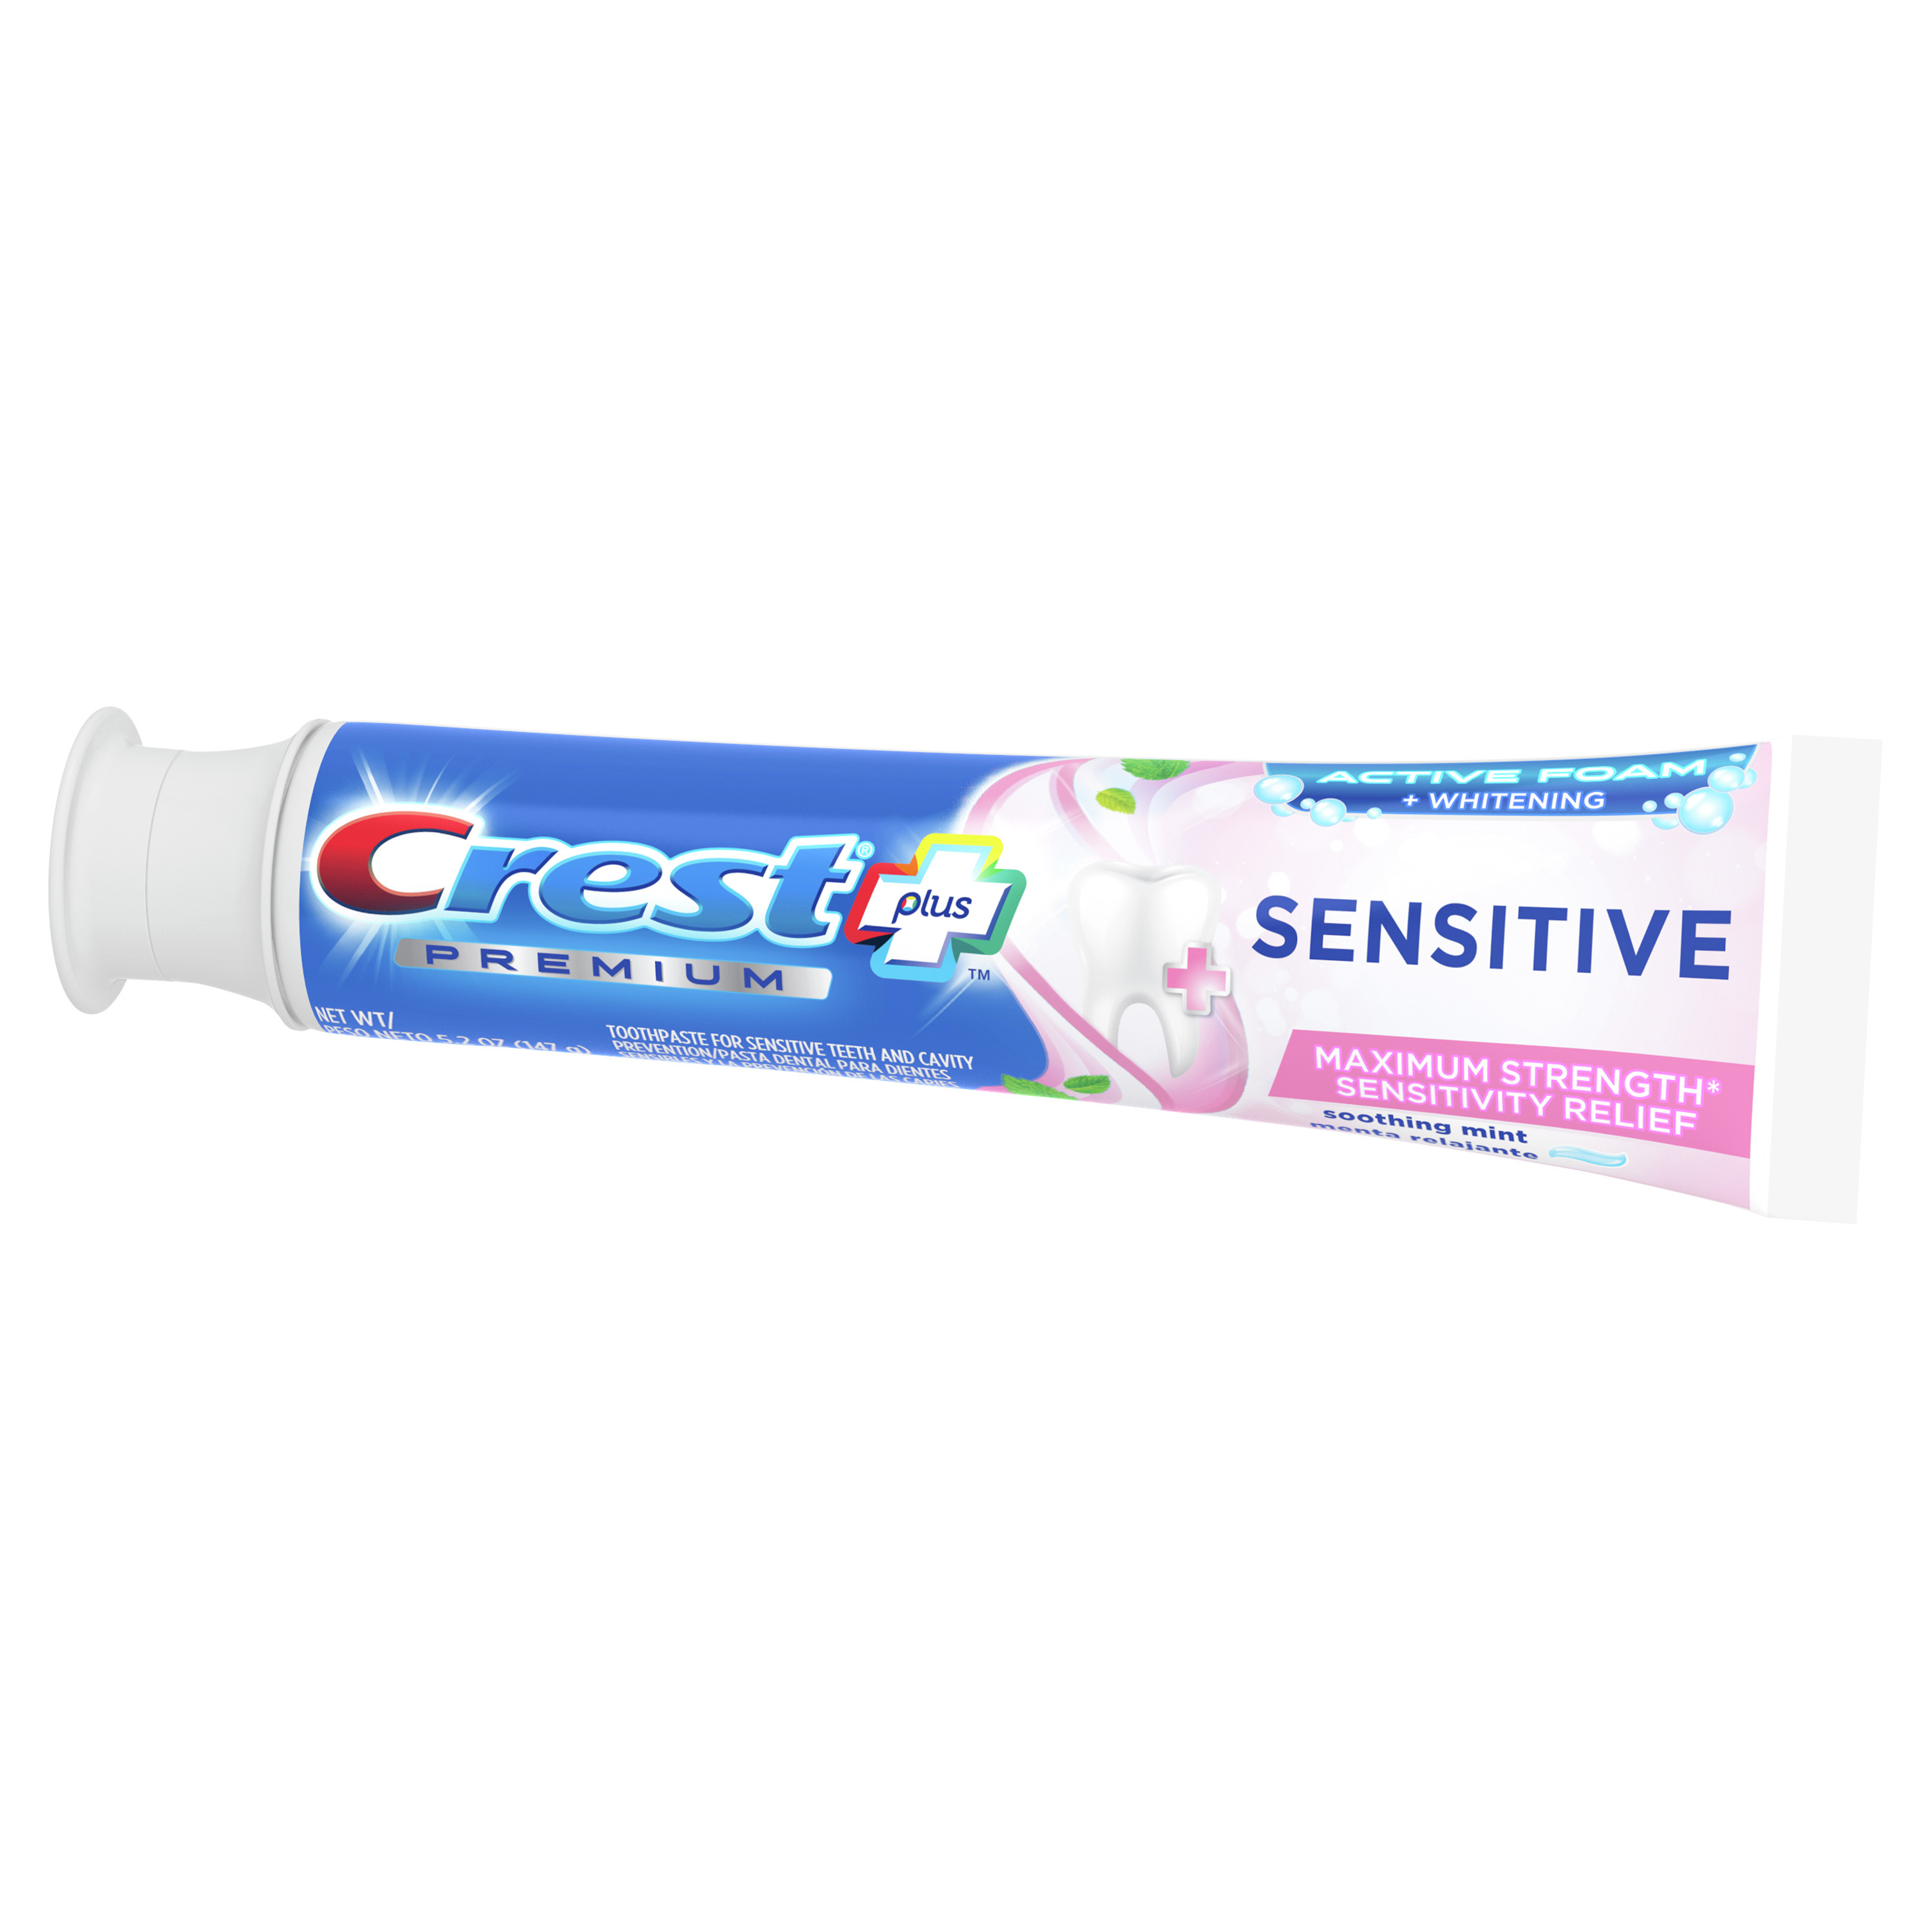 Crest Premium Plus Sensitive Toothpaste, Soothing Mint Flavor, 5.2 oz - image 2 of 5